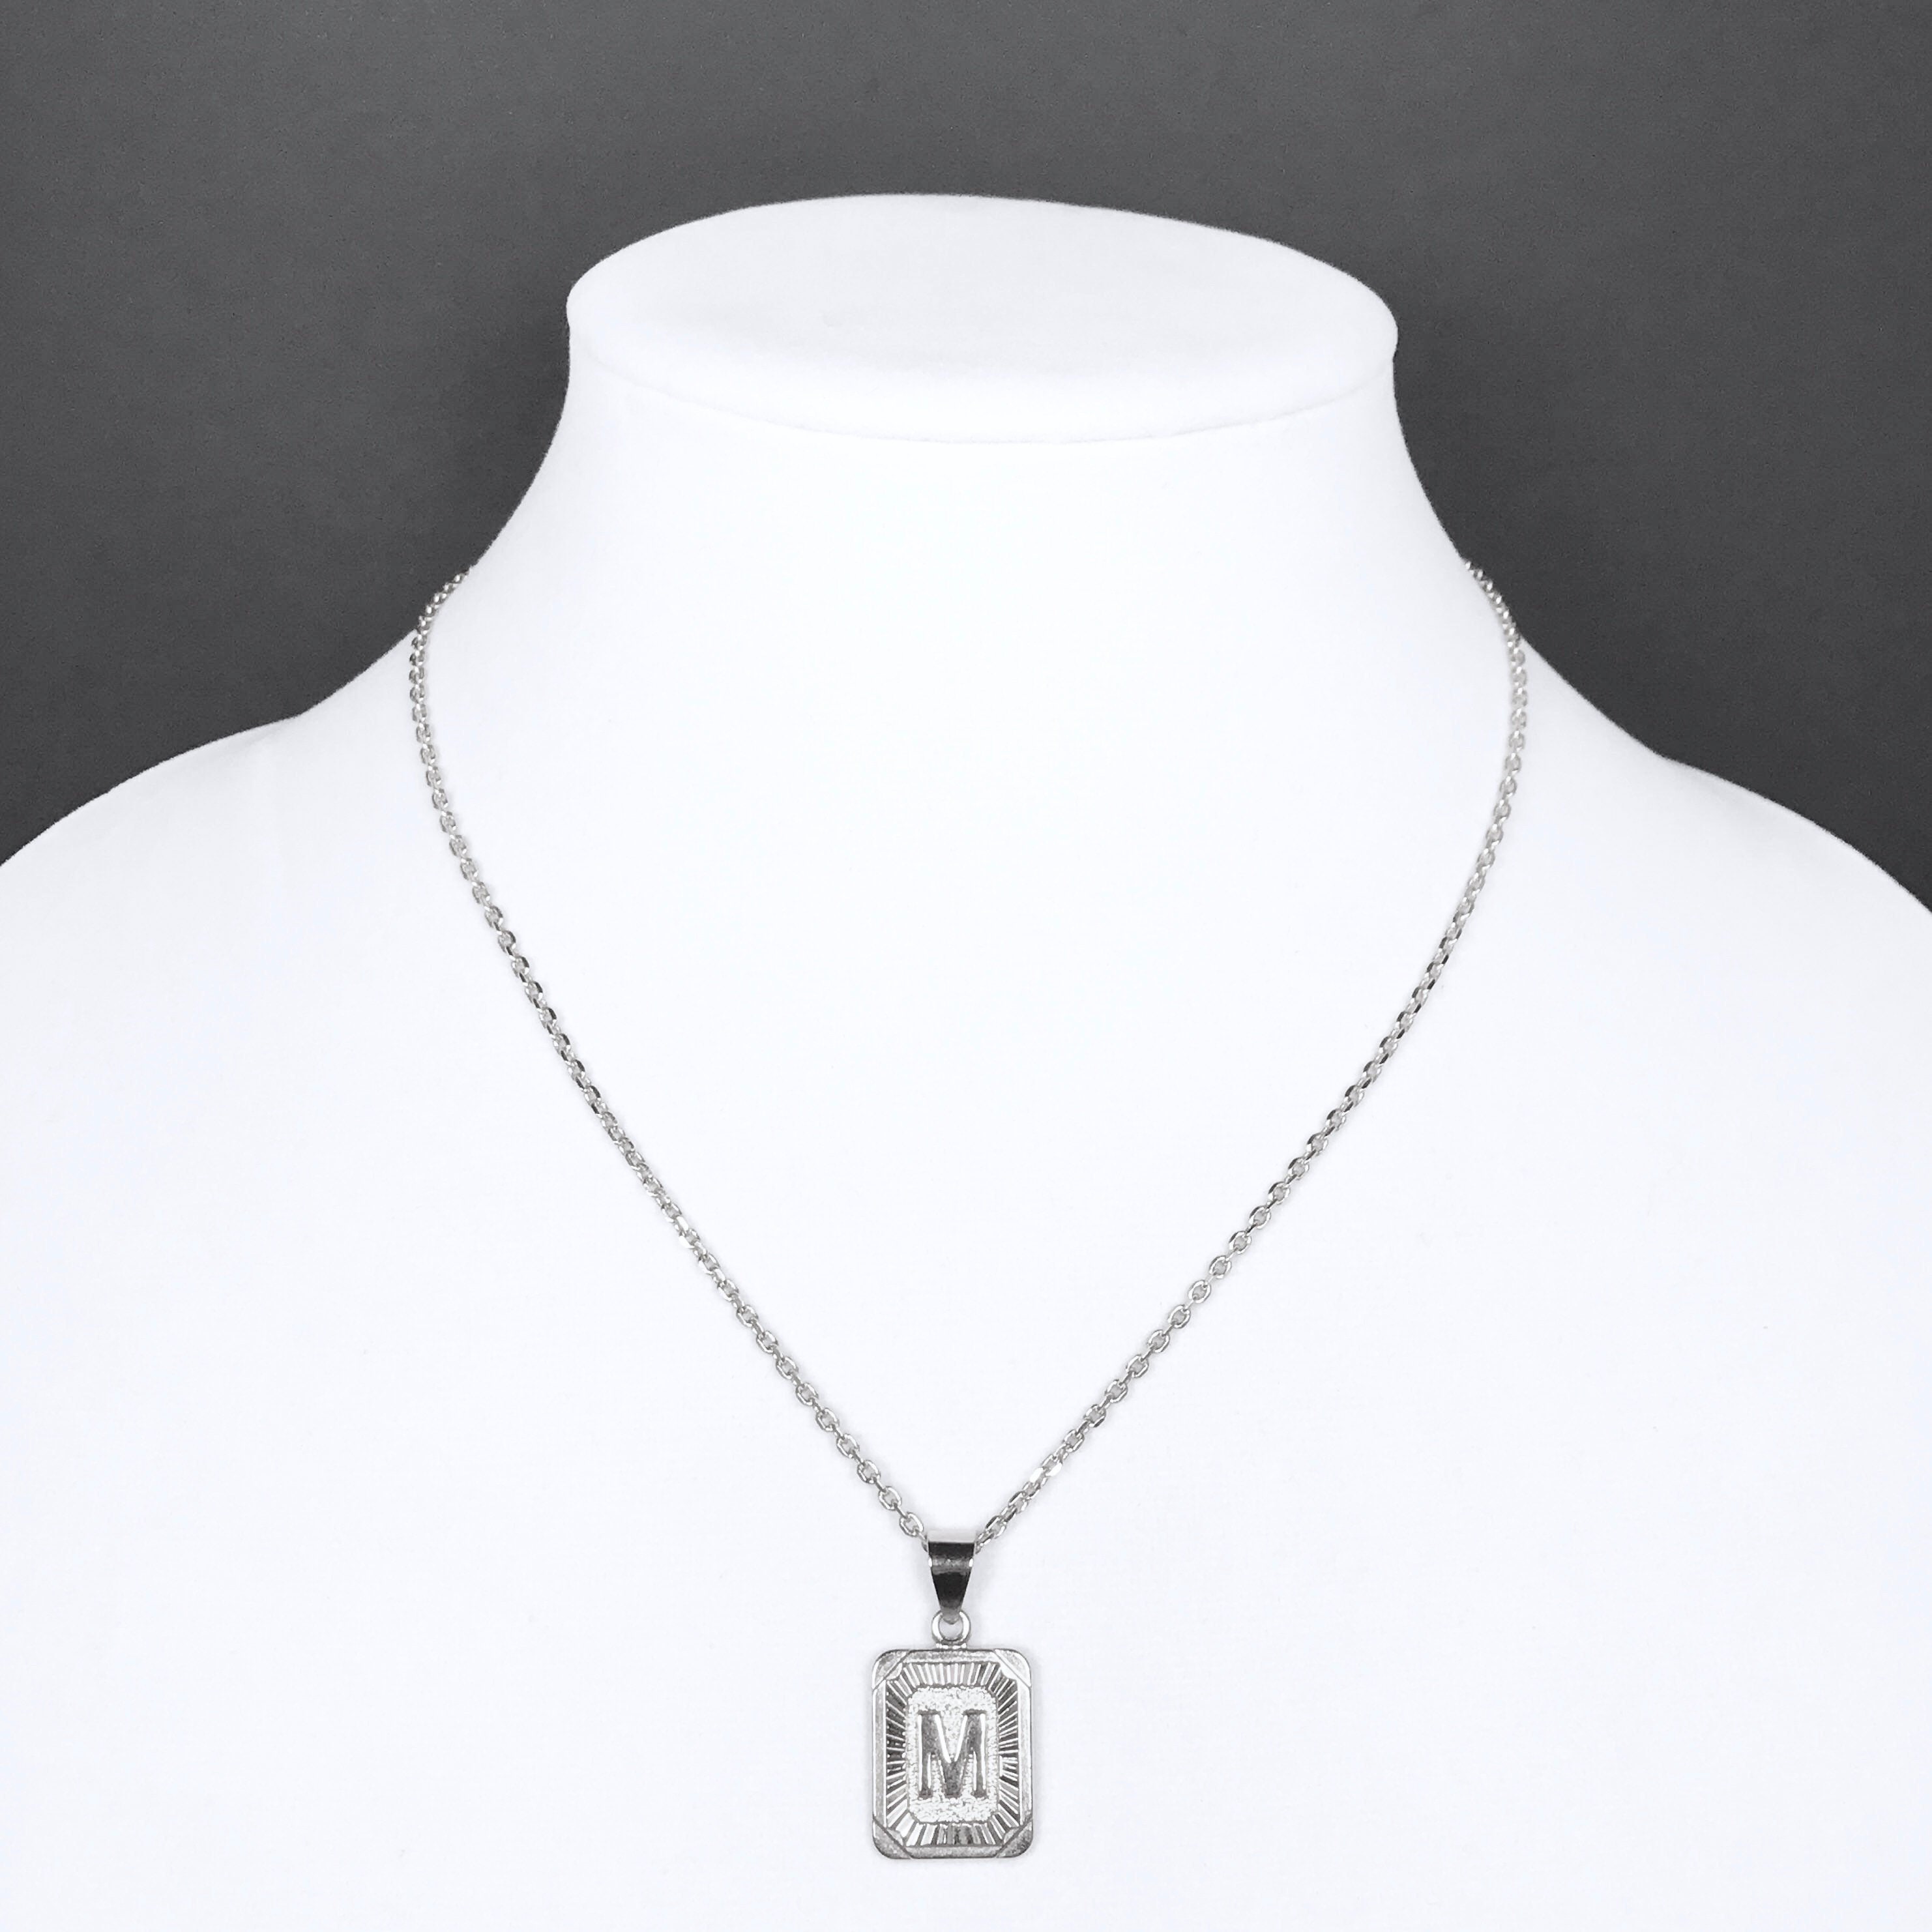 Men's Steel Letter Necklace  Letter pendant necklace, Initial necklace, Men  necklace